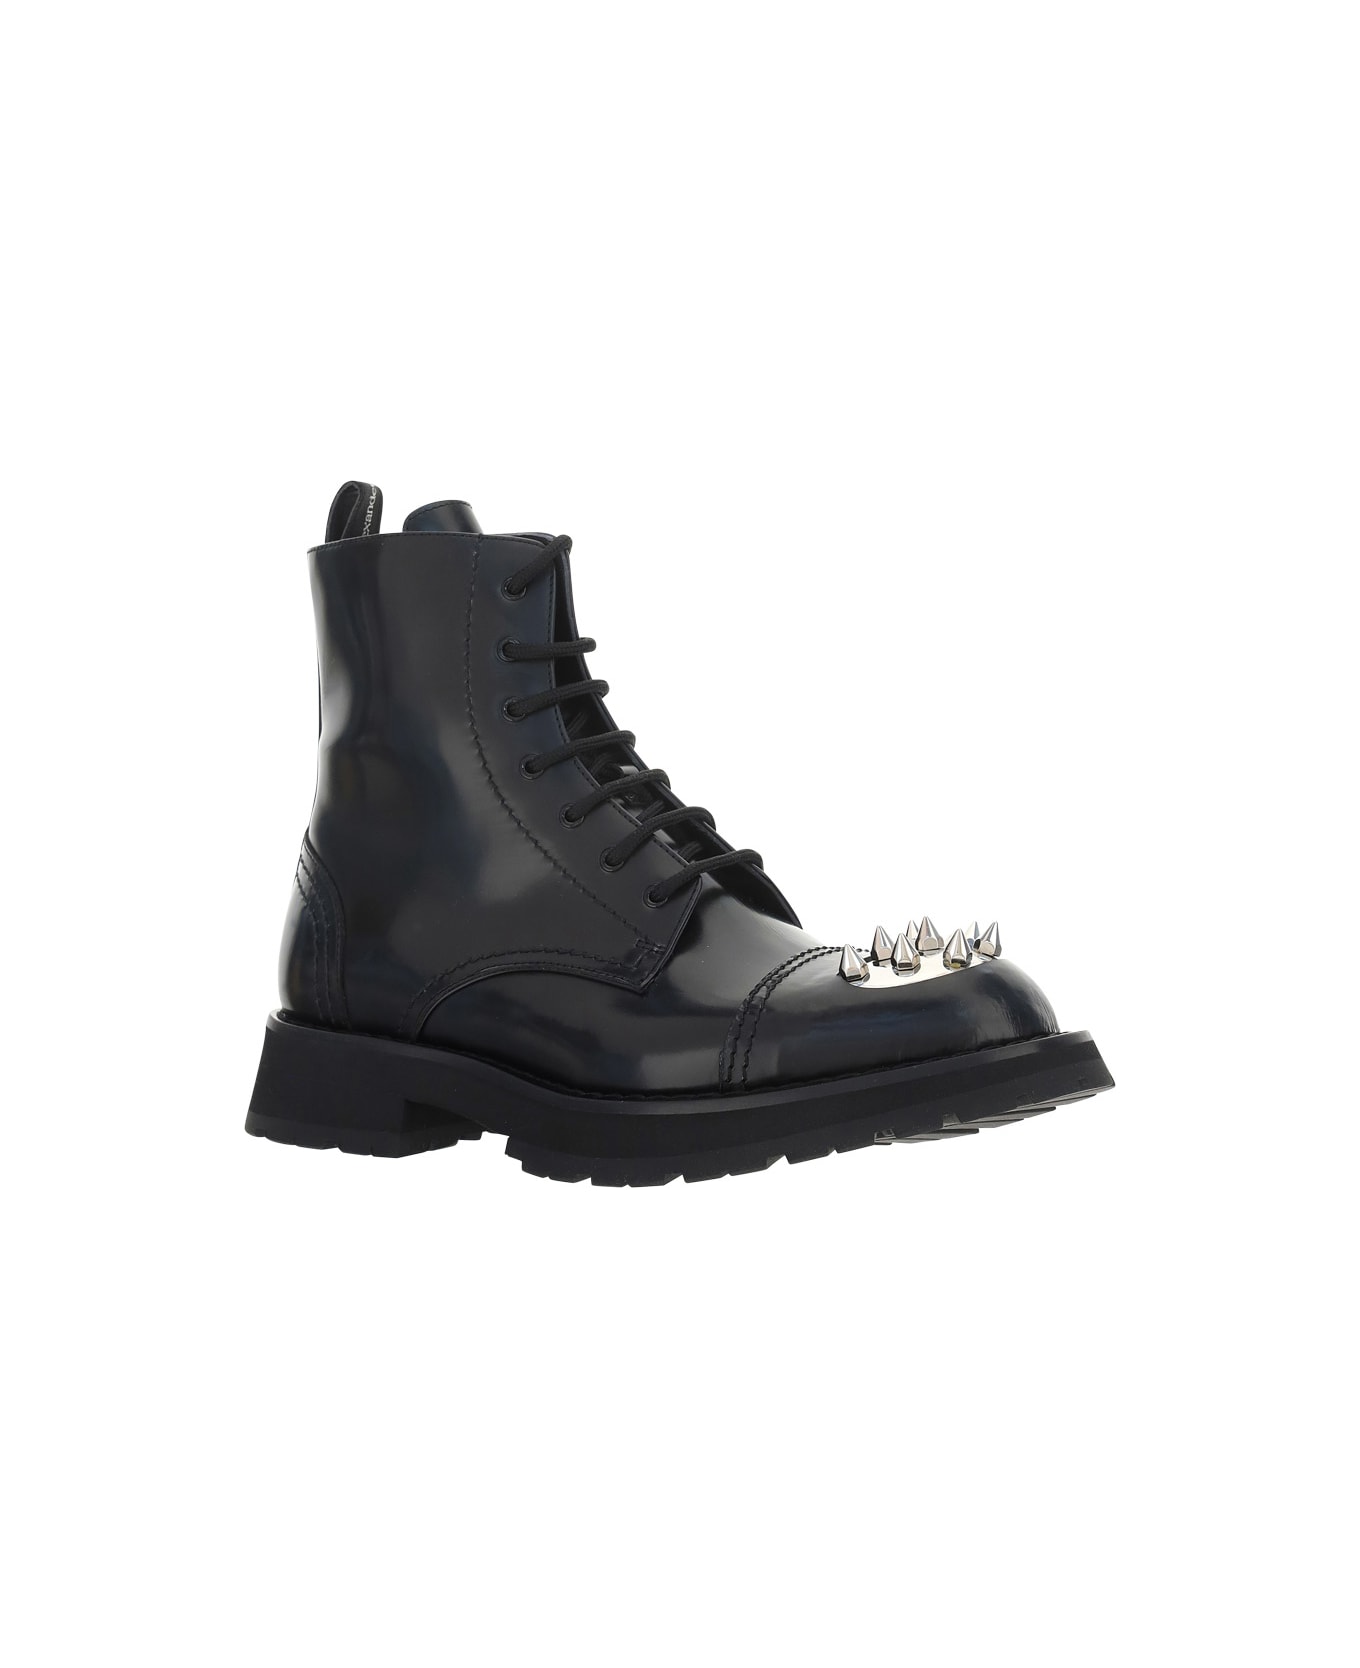 Alexander McQueen Boots - Black/silver